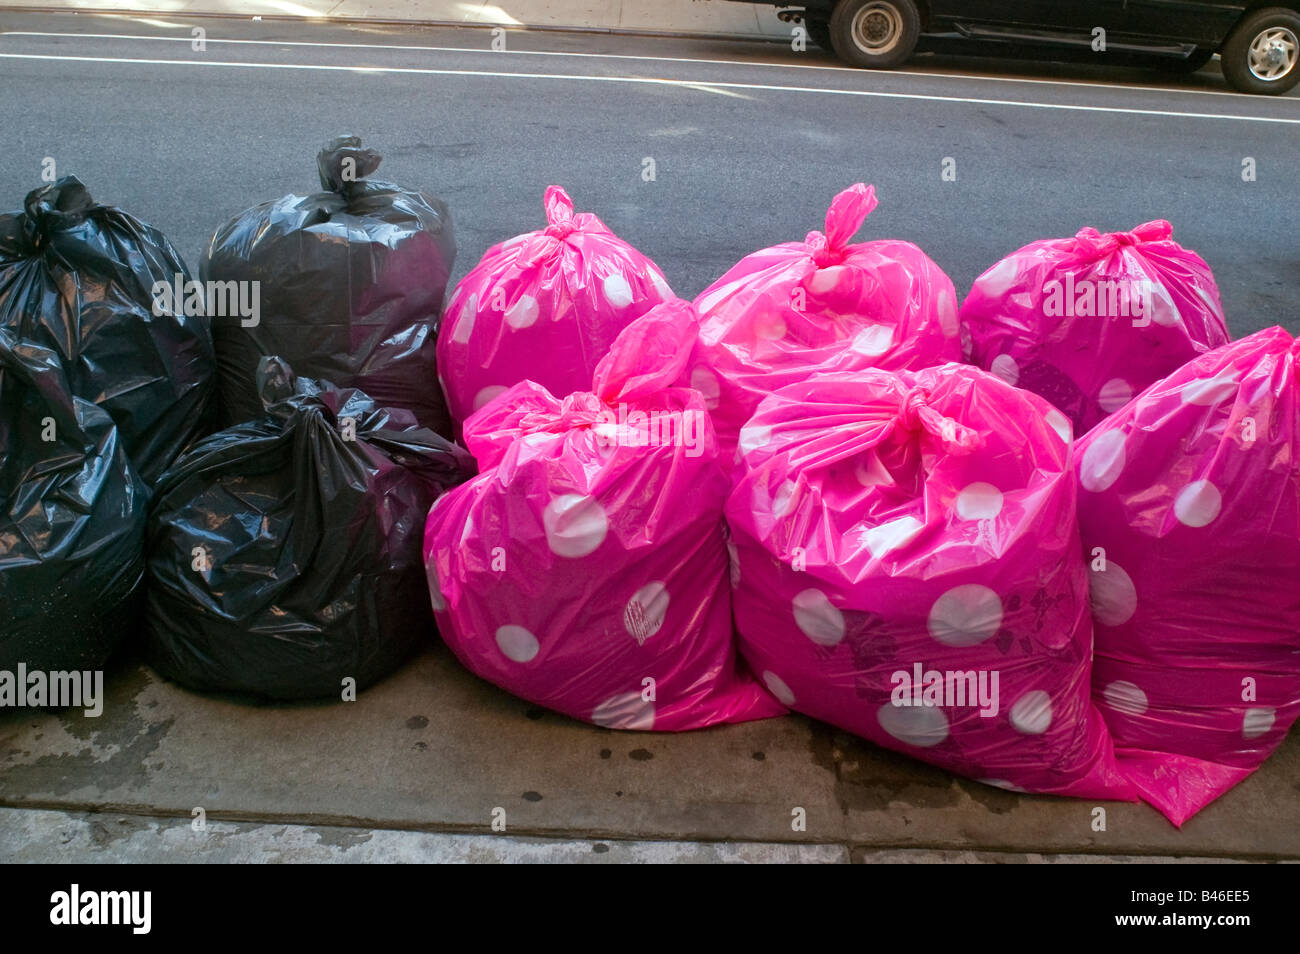 https://c8.alamy.com/comp/B46EE5/colorful-pink-polka-dot-plastic-trash-bags-are-piled-on-the-street-B46EE5.jpg